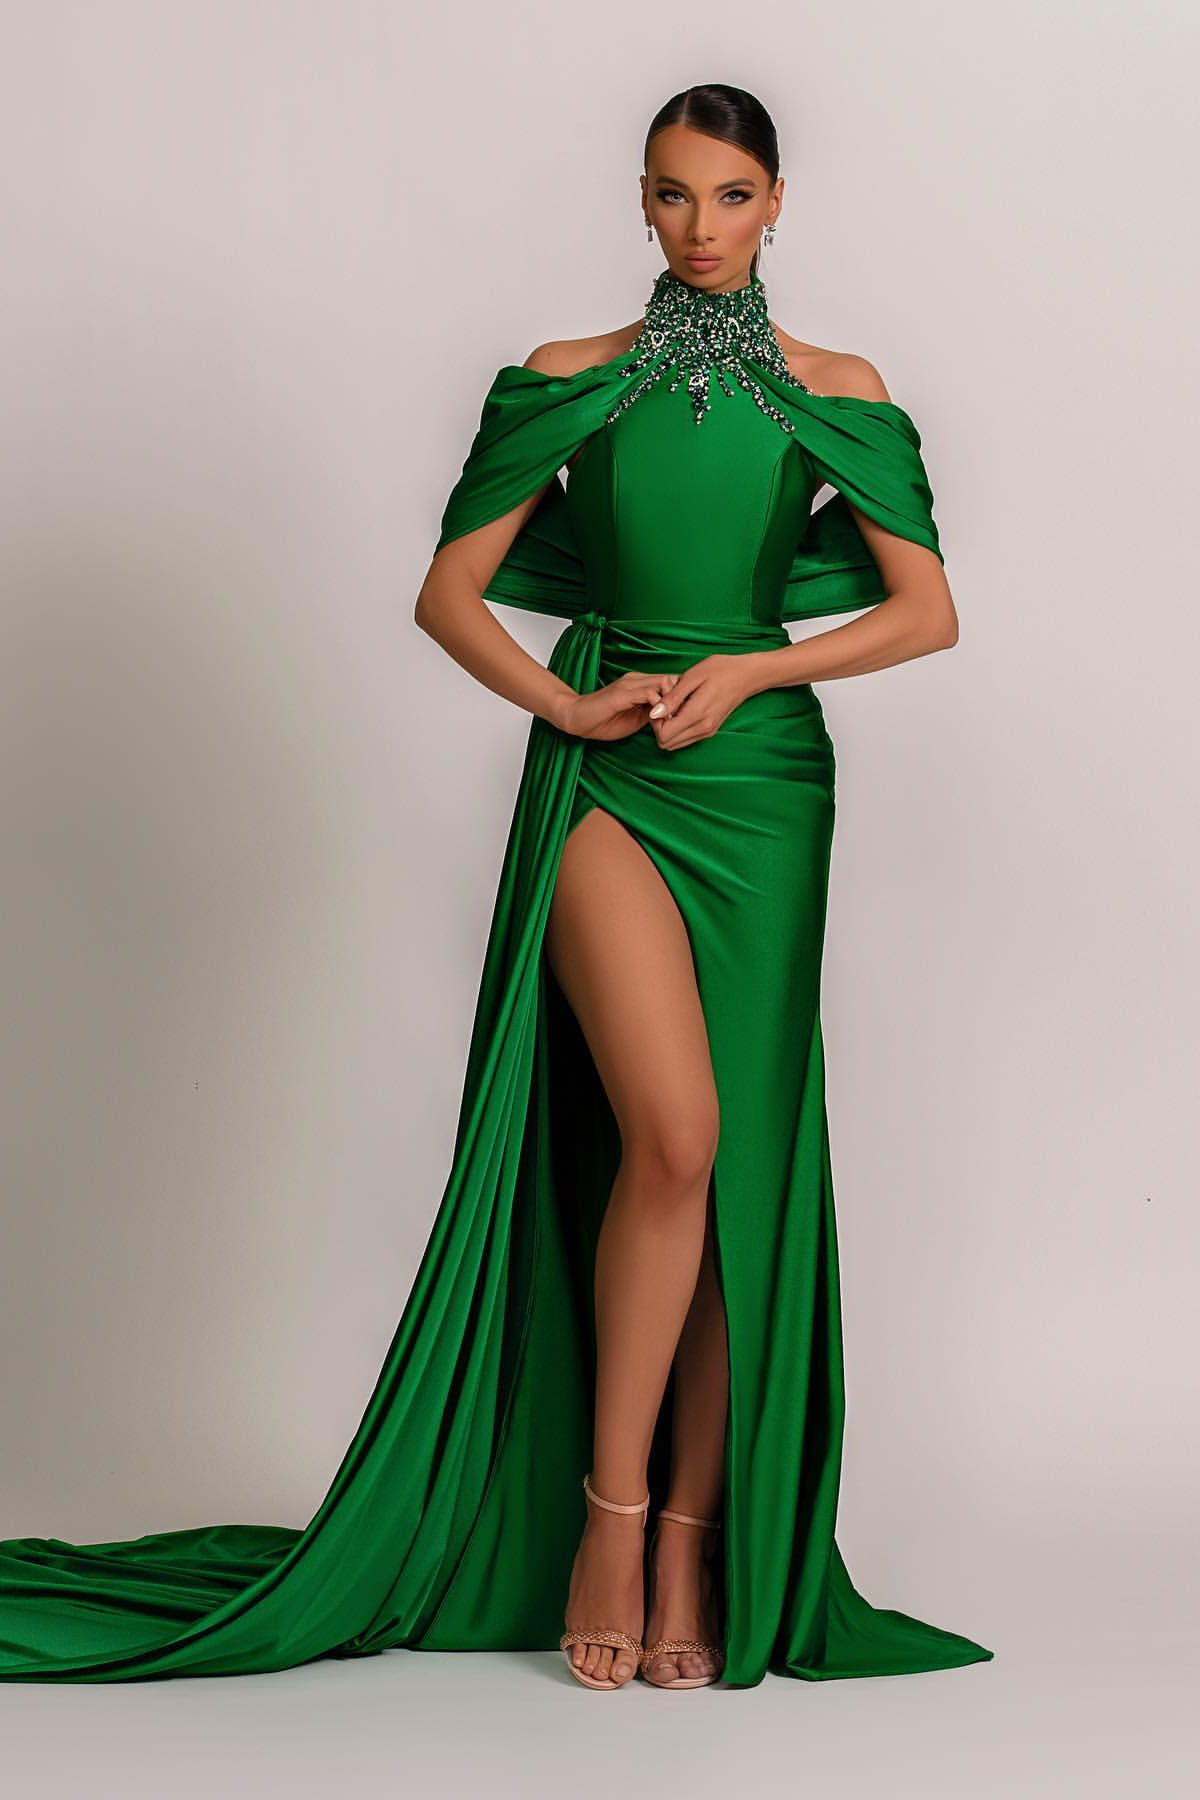 Classic Emerald Green High Neck Mermaid Prom Dress Split With beads - lulusllly